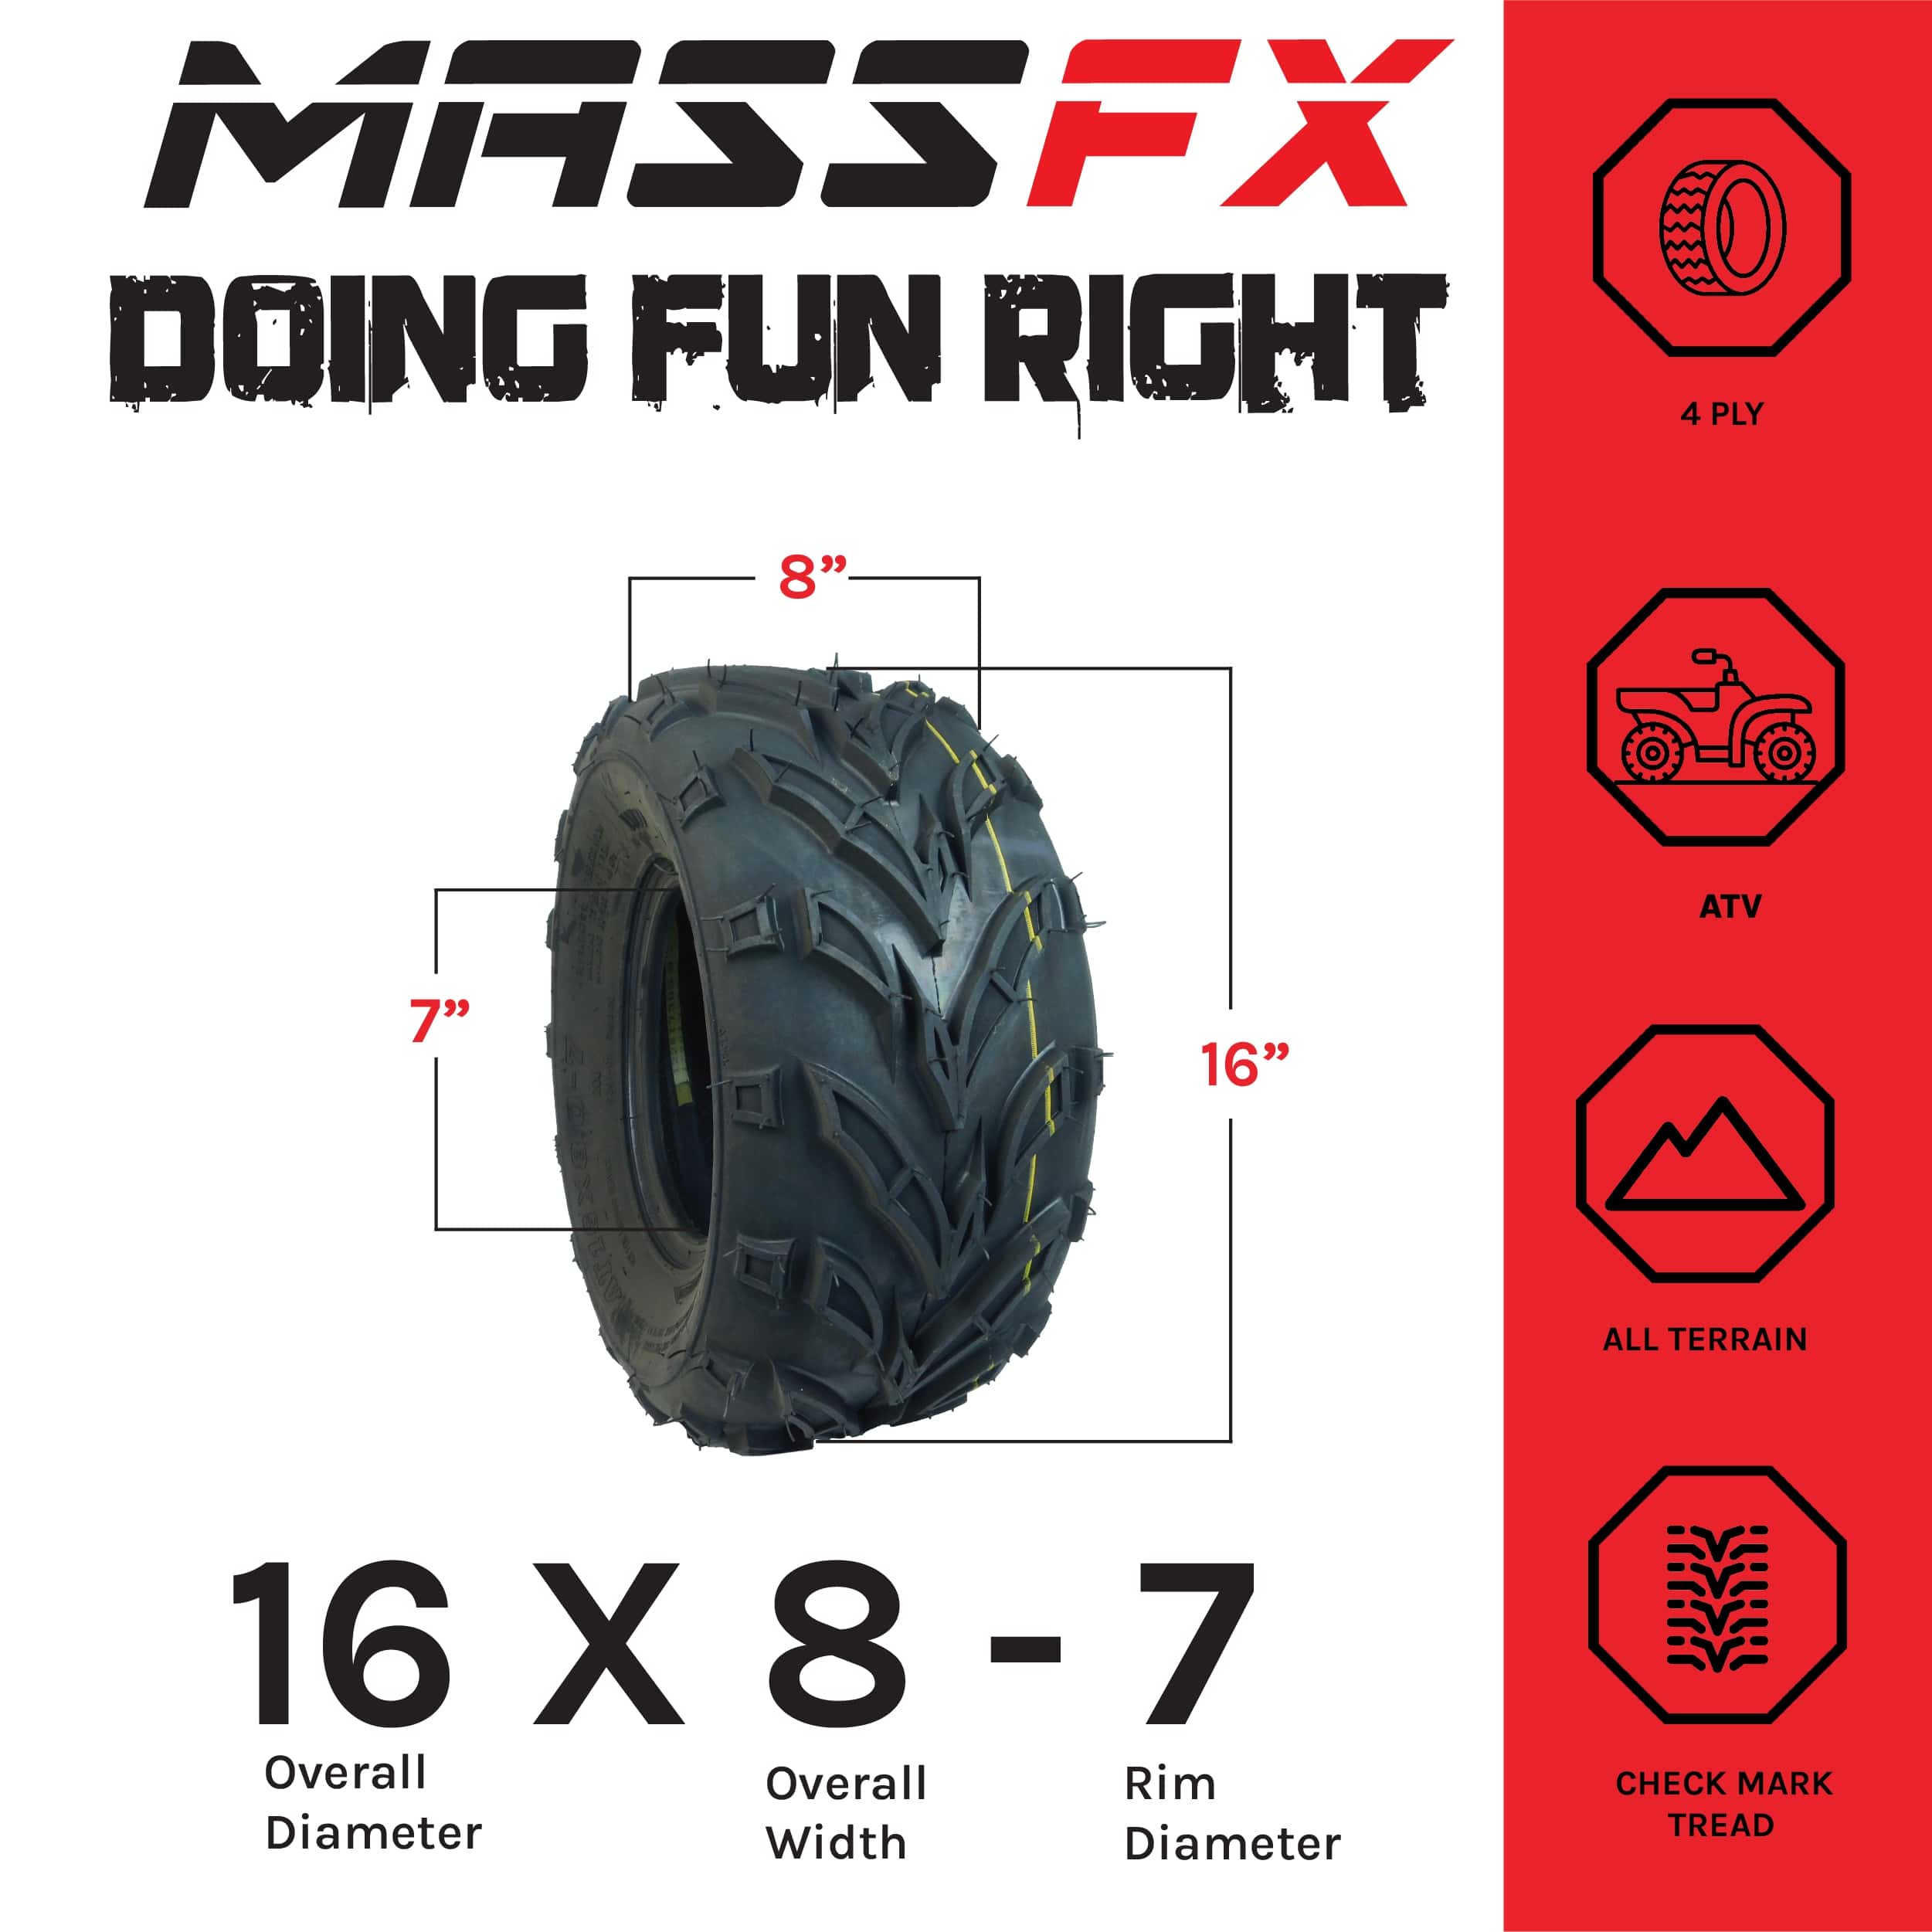 MASSFX-Go-Kart-ATV-Single-Tire-16x8-7-4Ply-image-1